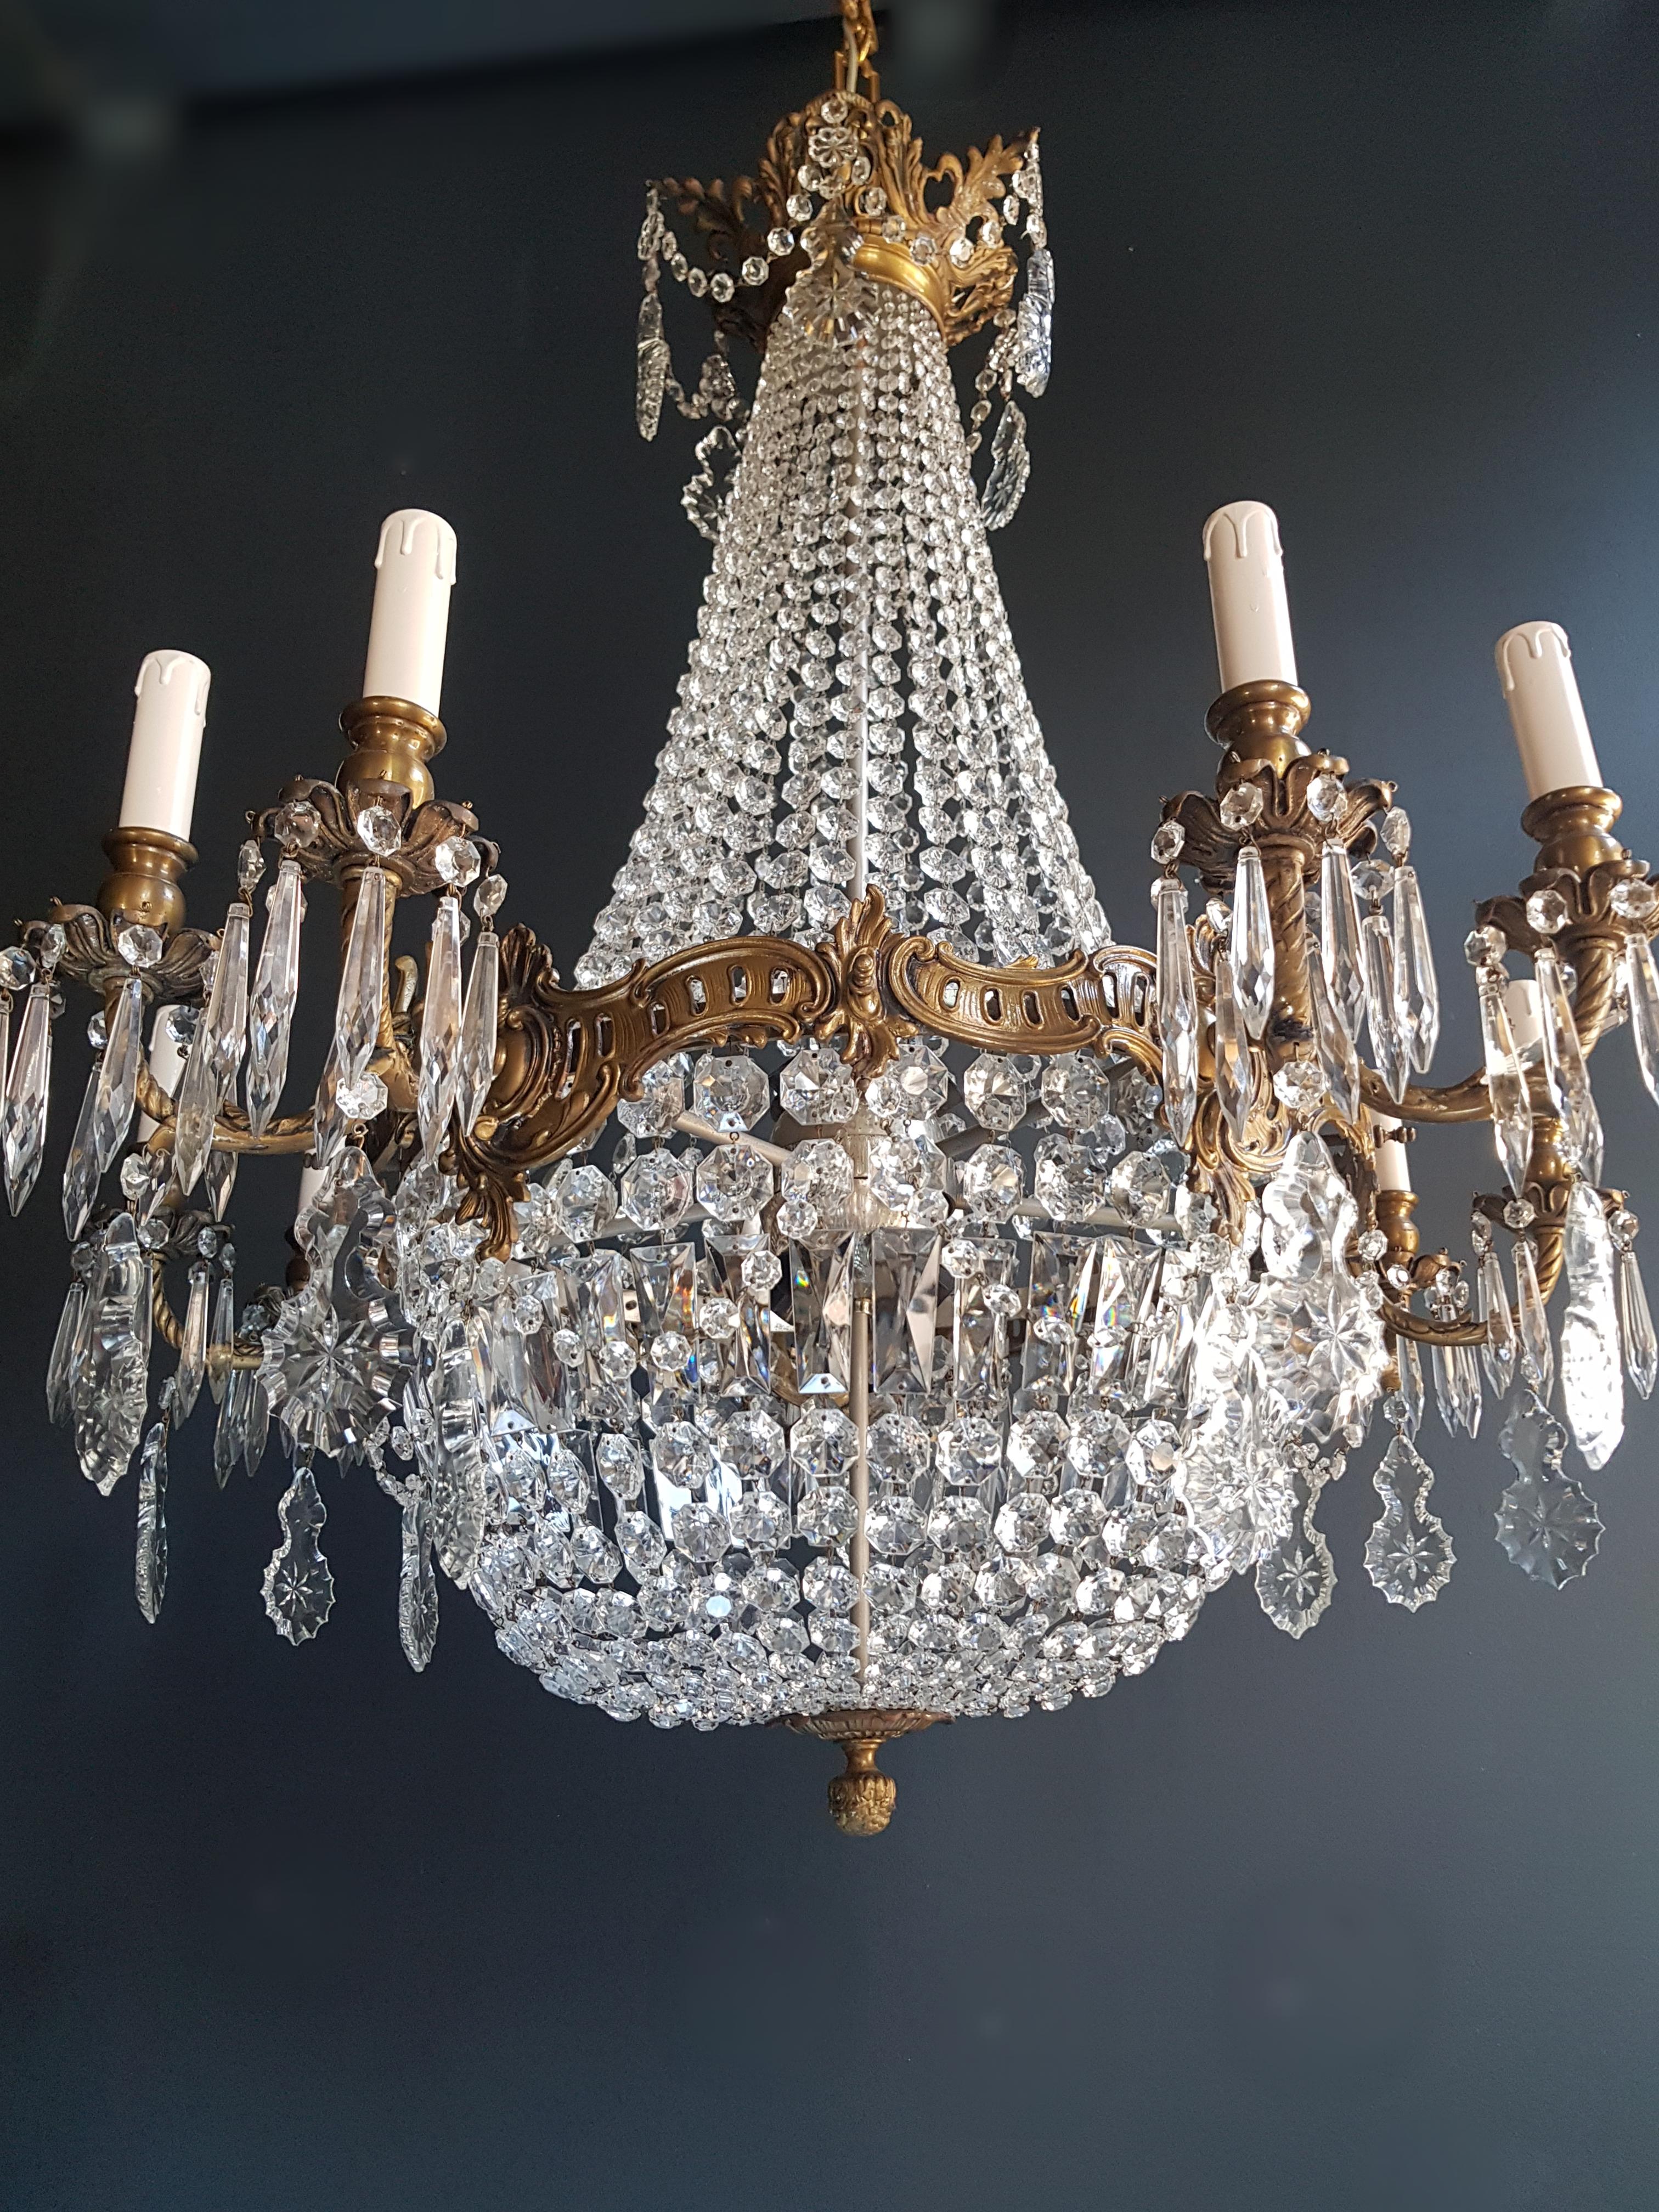 Brass Montgolfiè Empire Sac a Pearl Chandelier Crystal Lustre Ceiling Lamp Antique